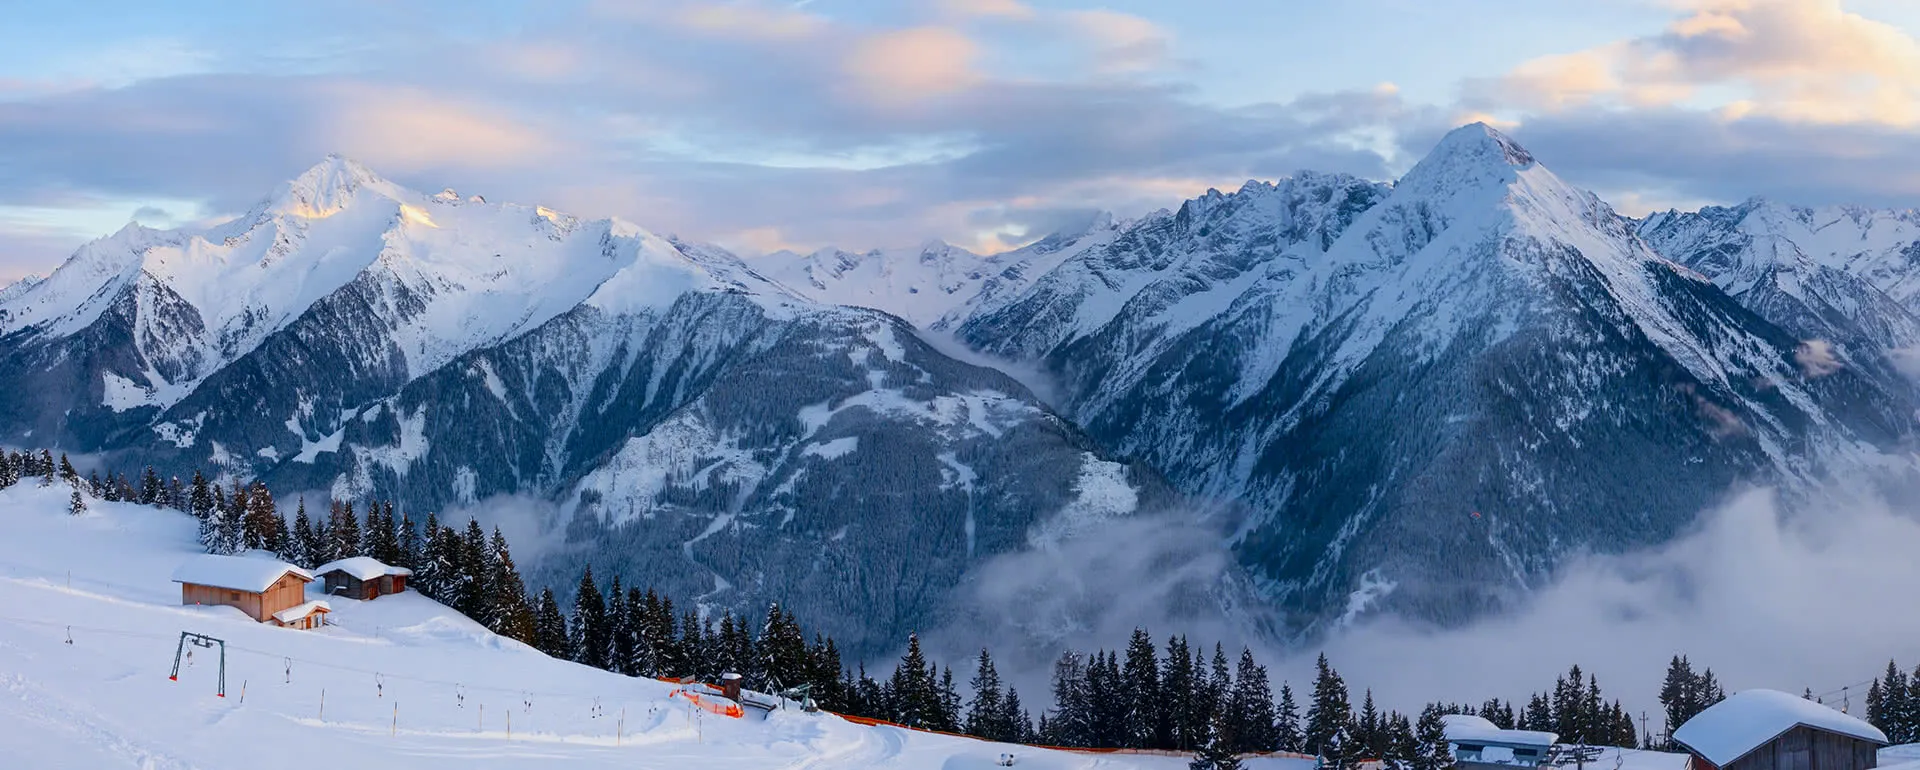 Mayrhofen panorama image